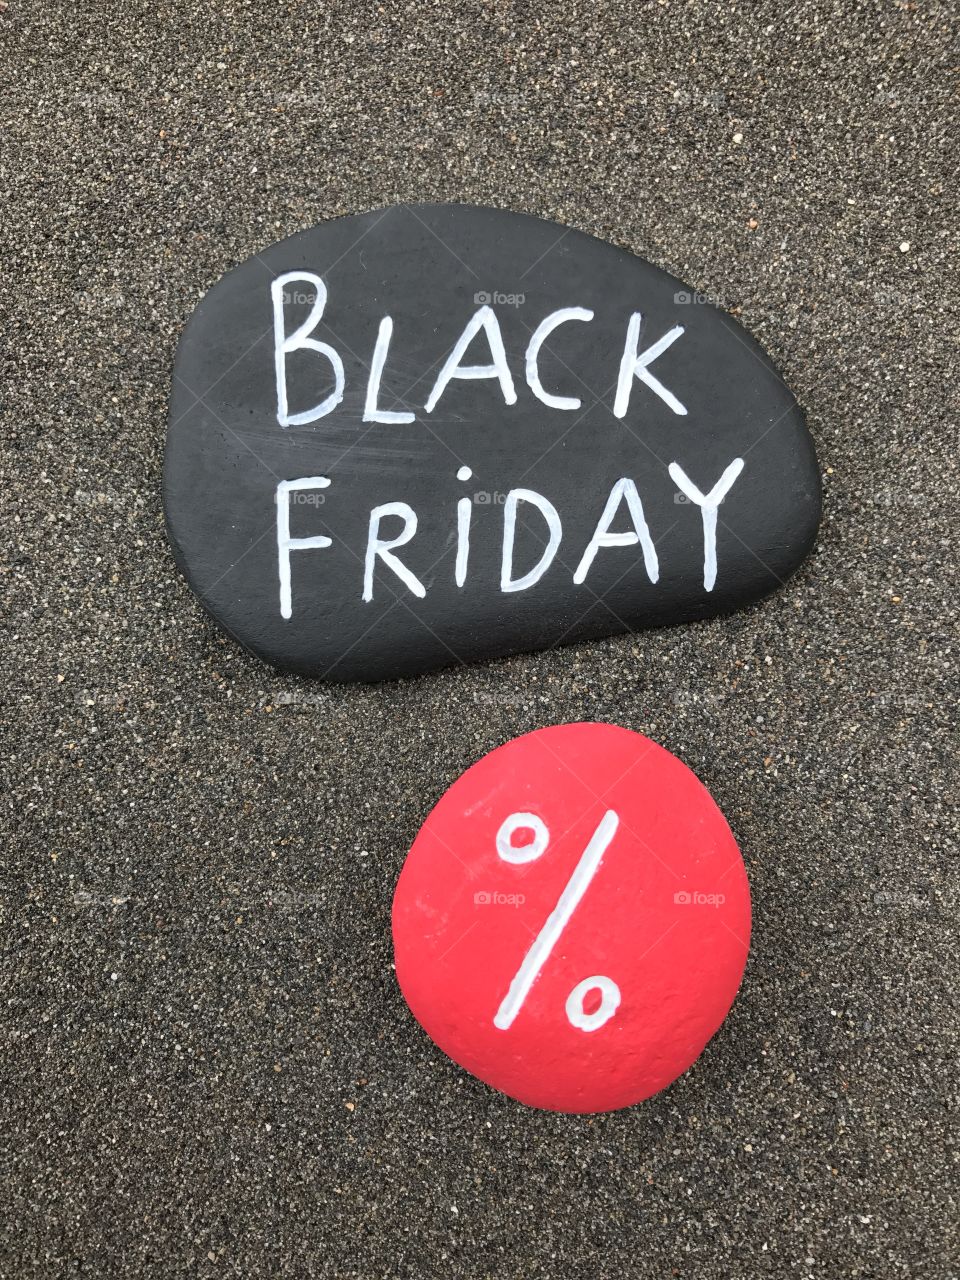 Black Friday per cent discount 